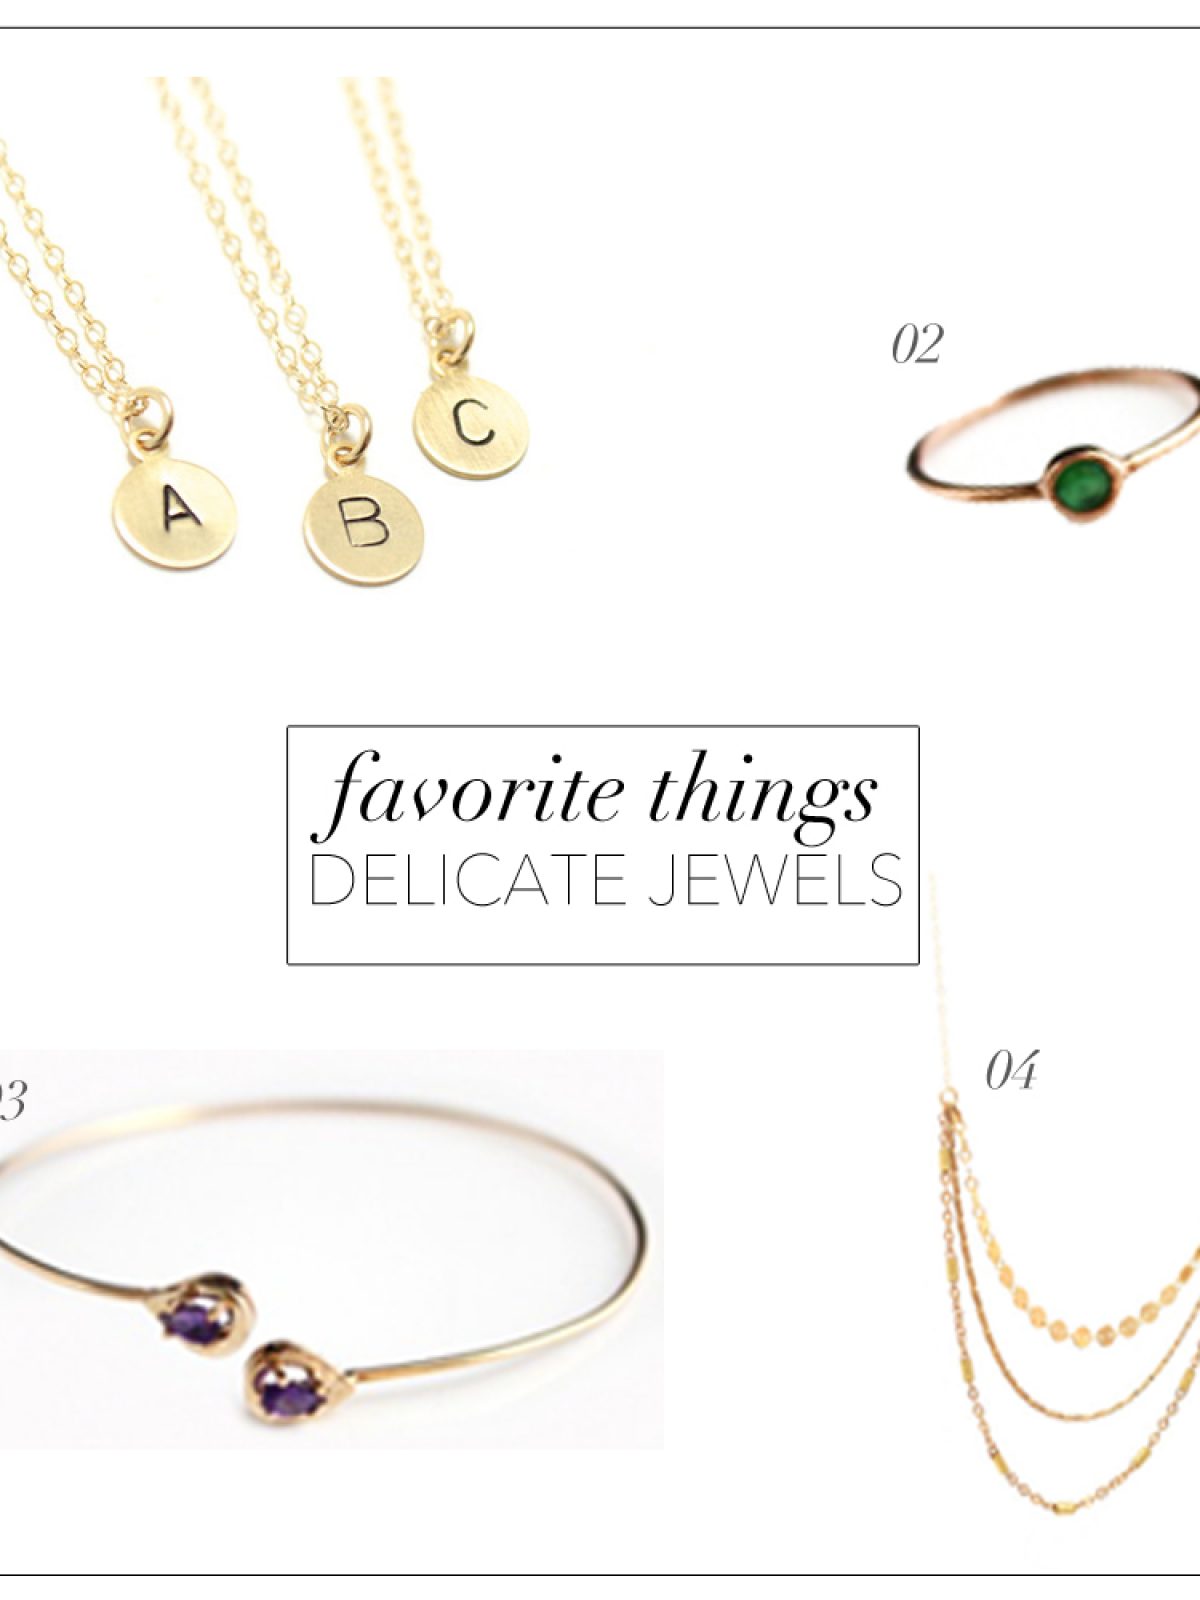 delicate jewelry